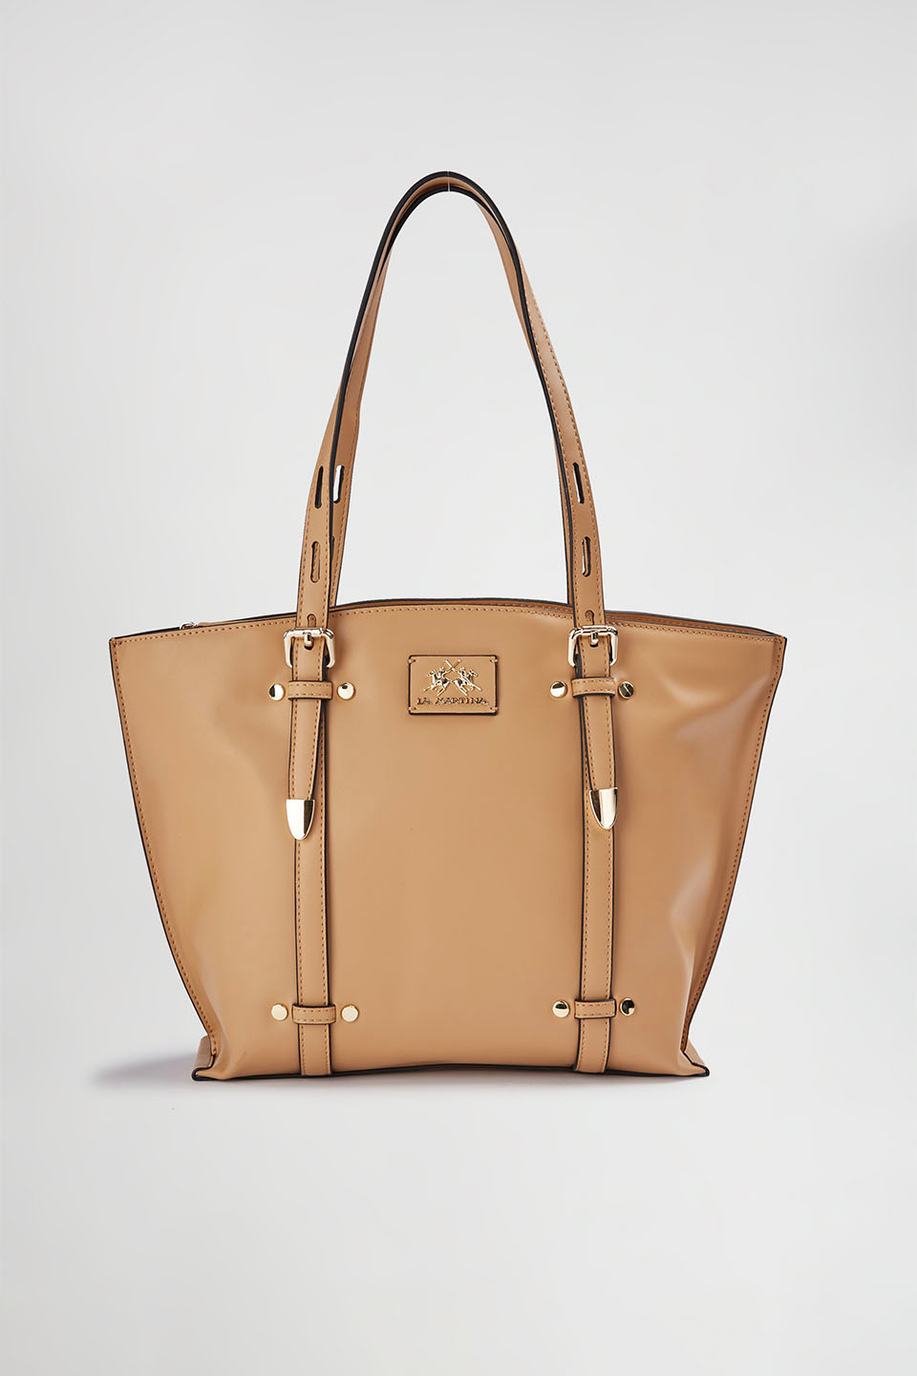 PU leather bag - Accessories Woman | La Martina - Official Online Shop